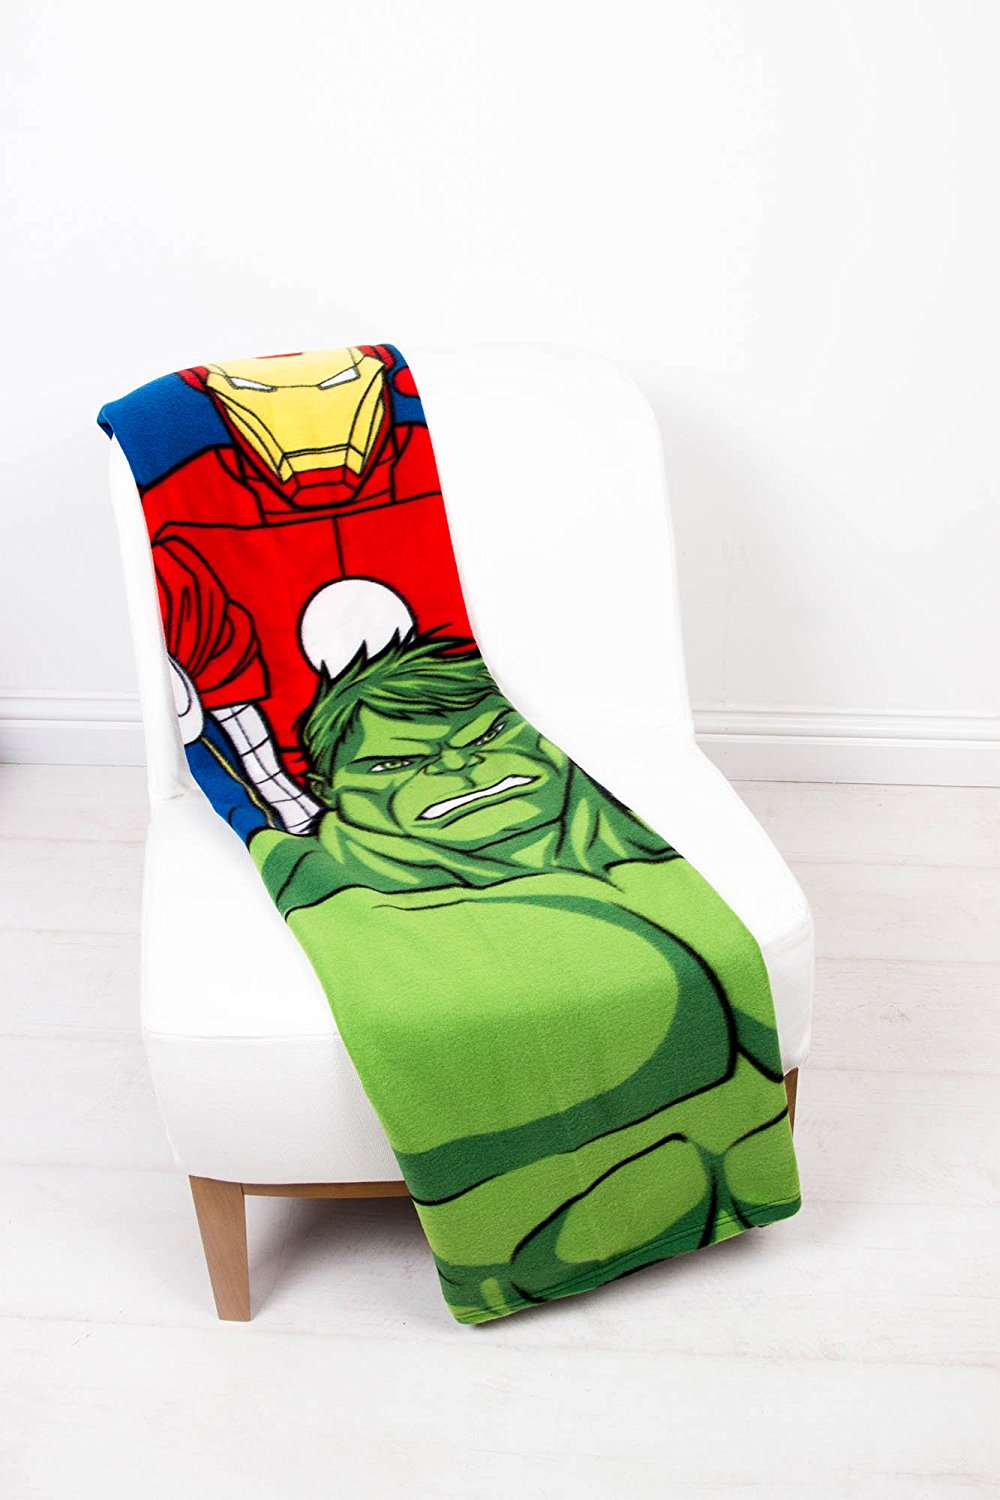 Avengers 'Mission' Panel Fleece Blanket Throw